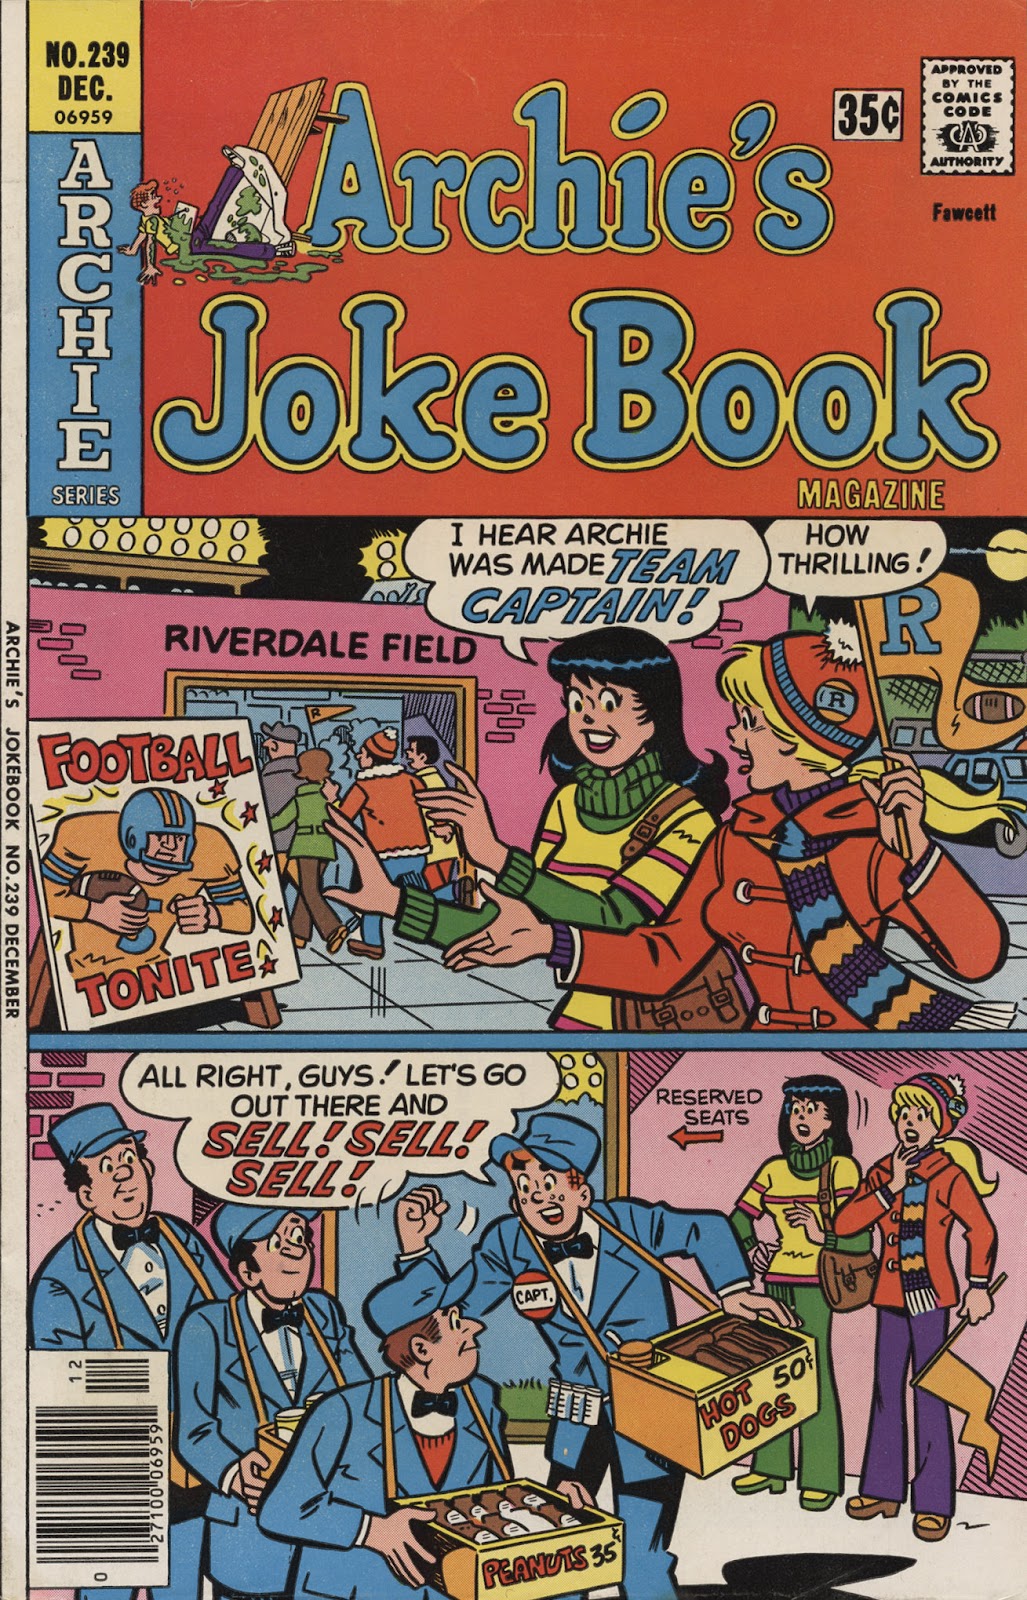 Archie's Joke Book Magazine issue 239 - Page 1